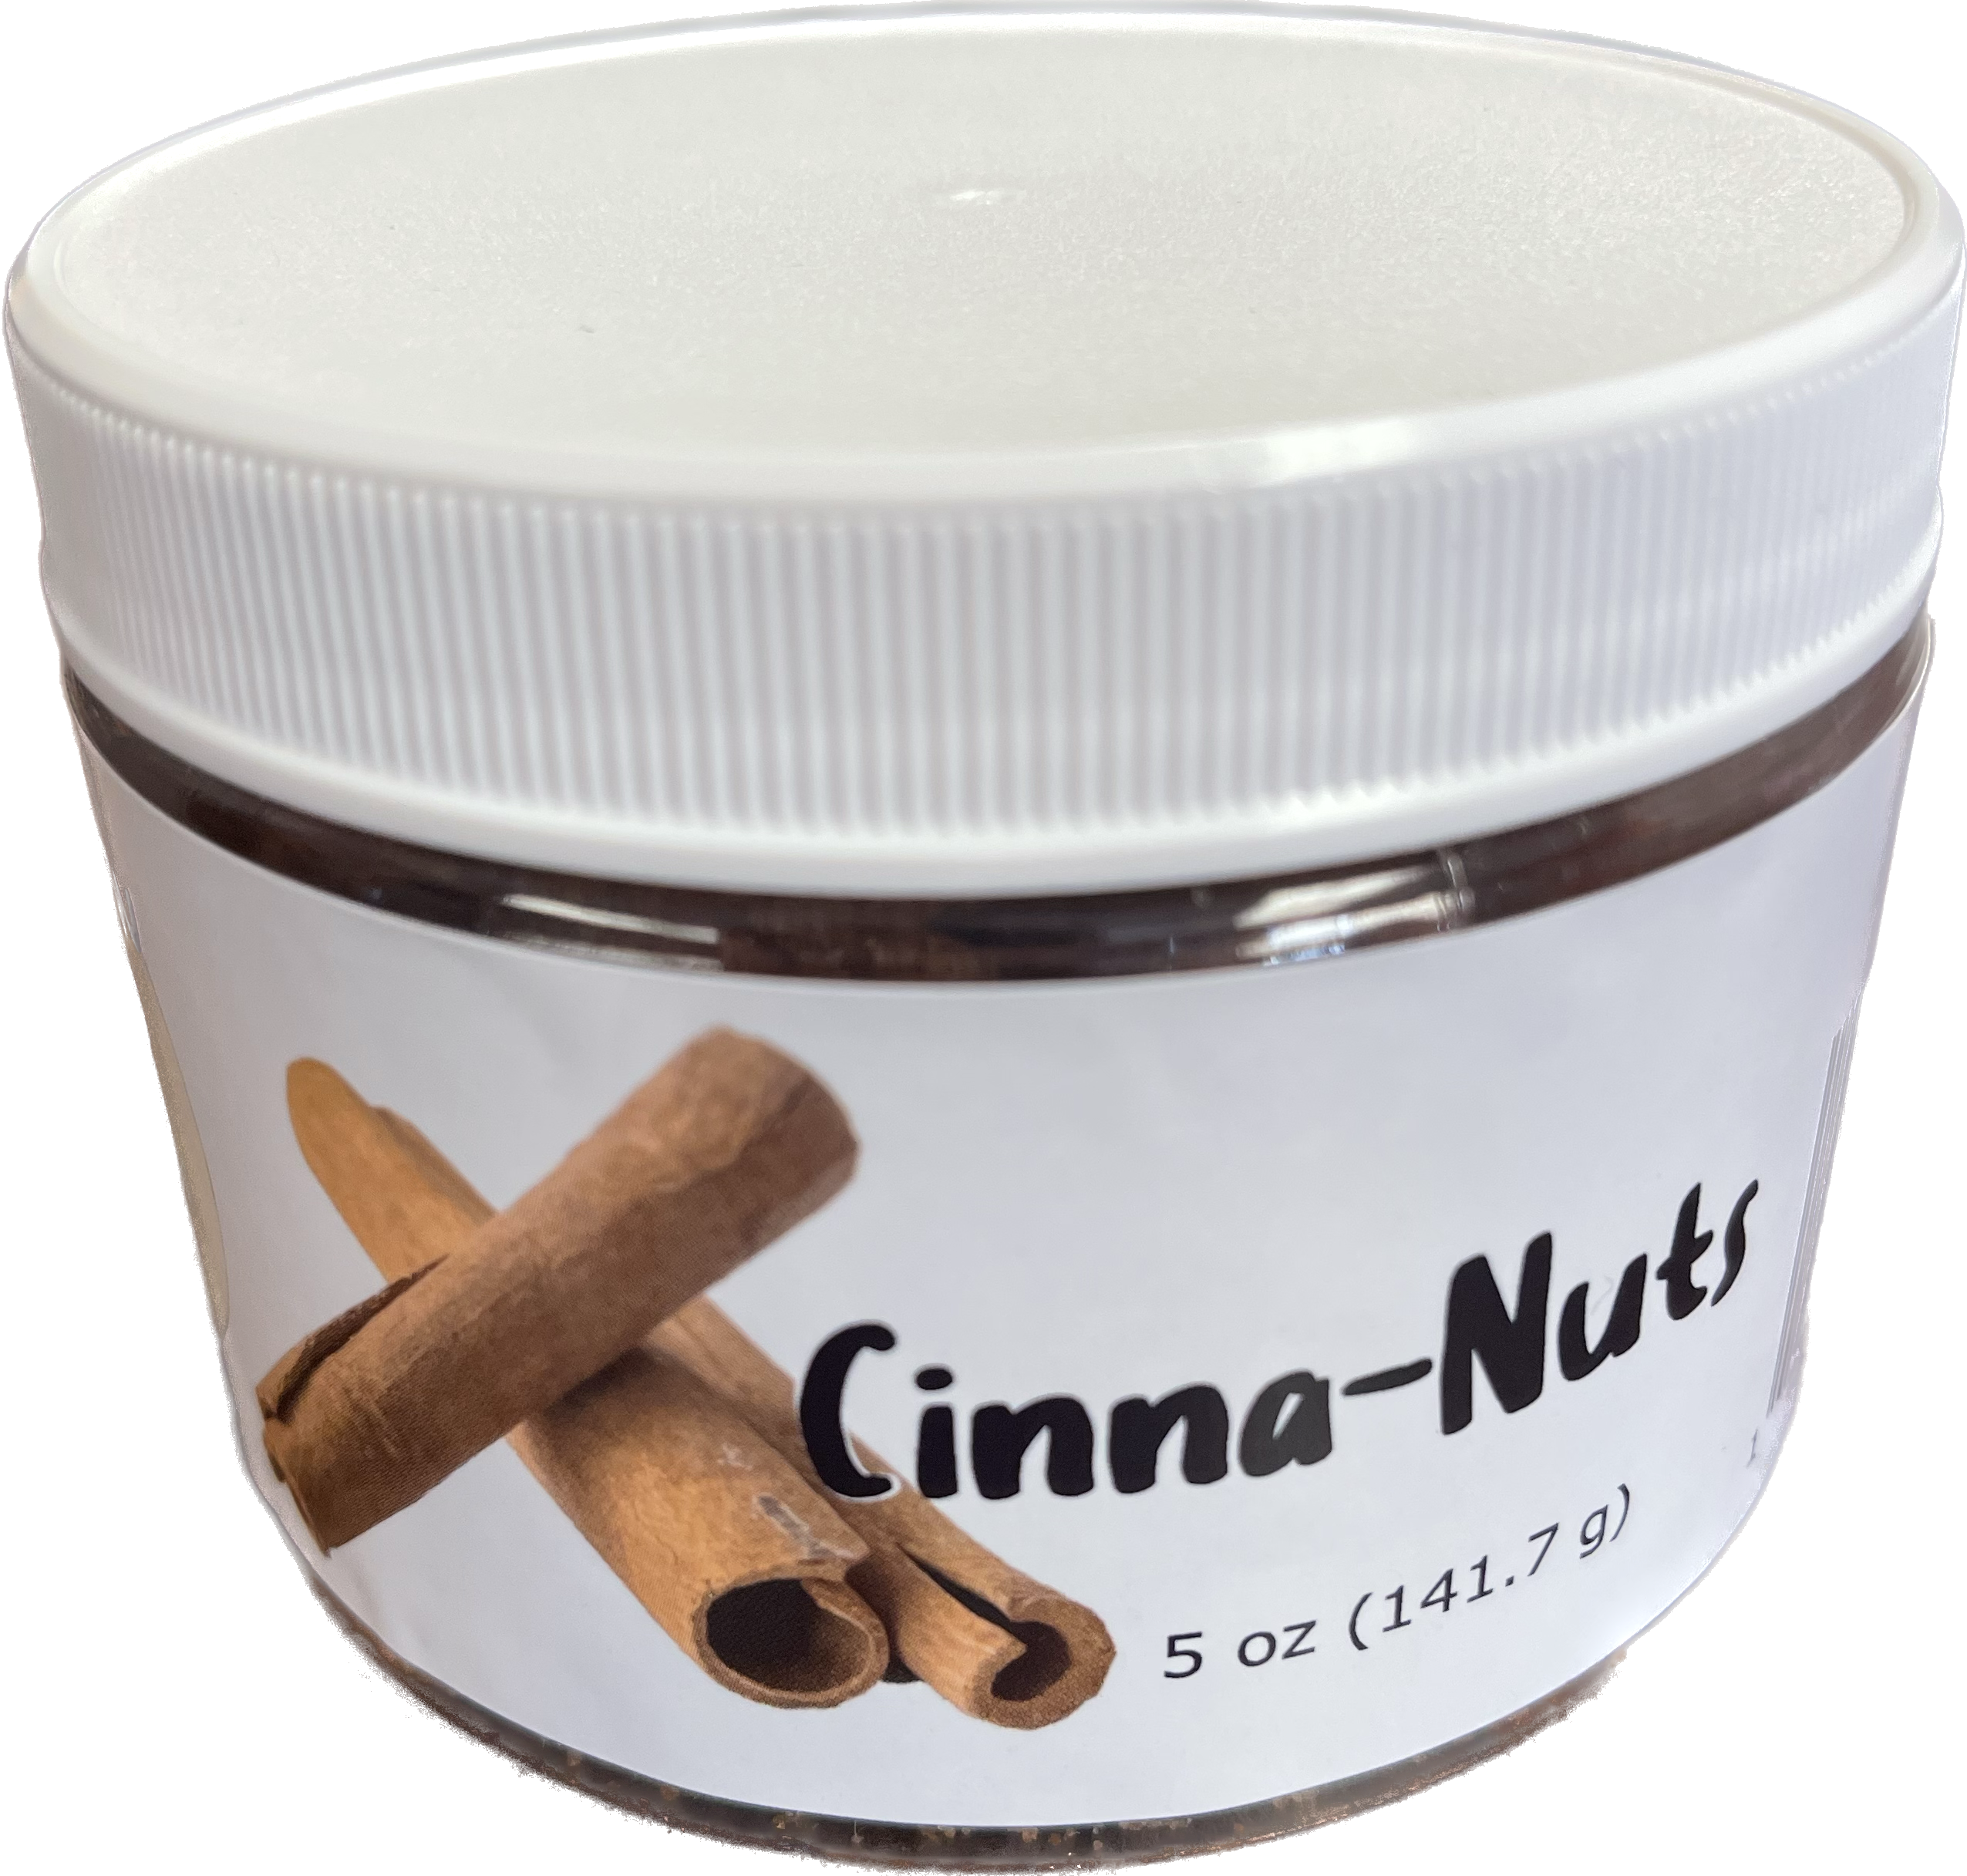 Mellow Nuts Cinna Nuts